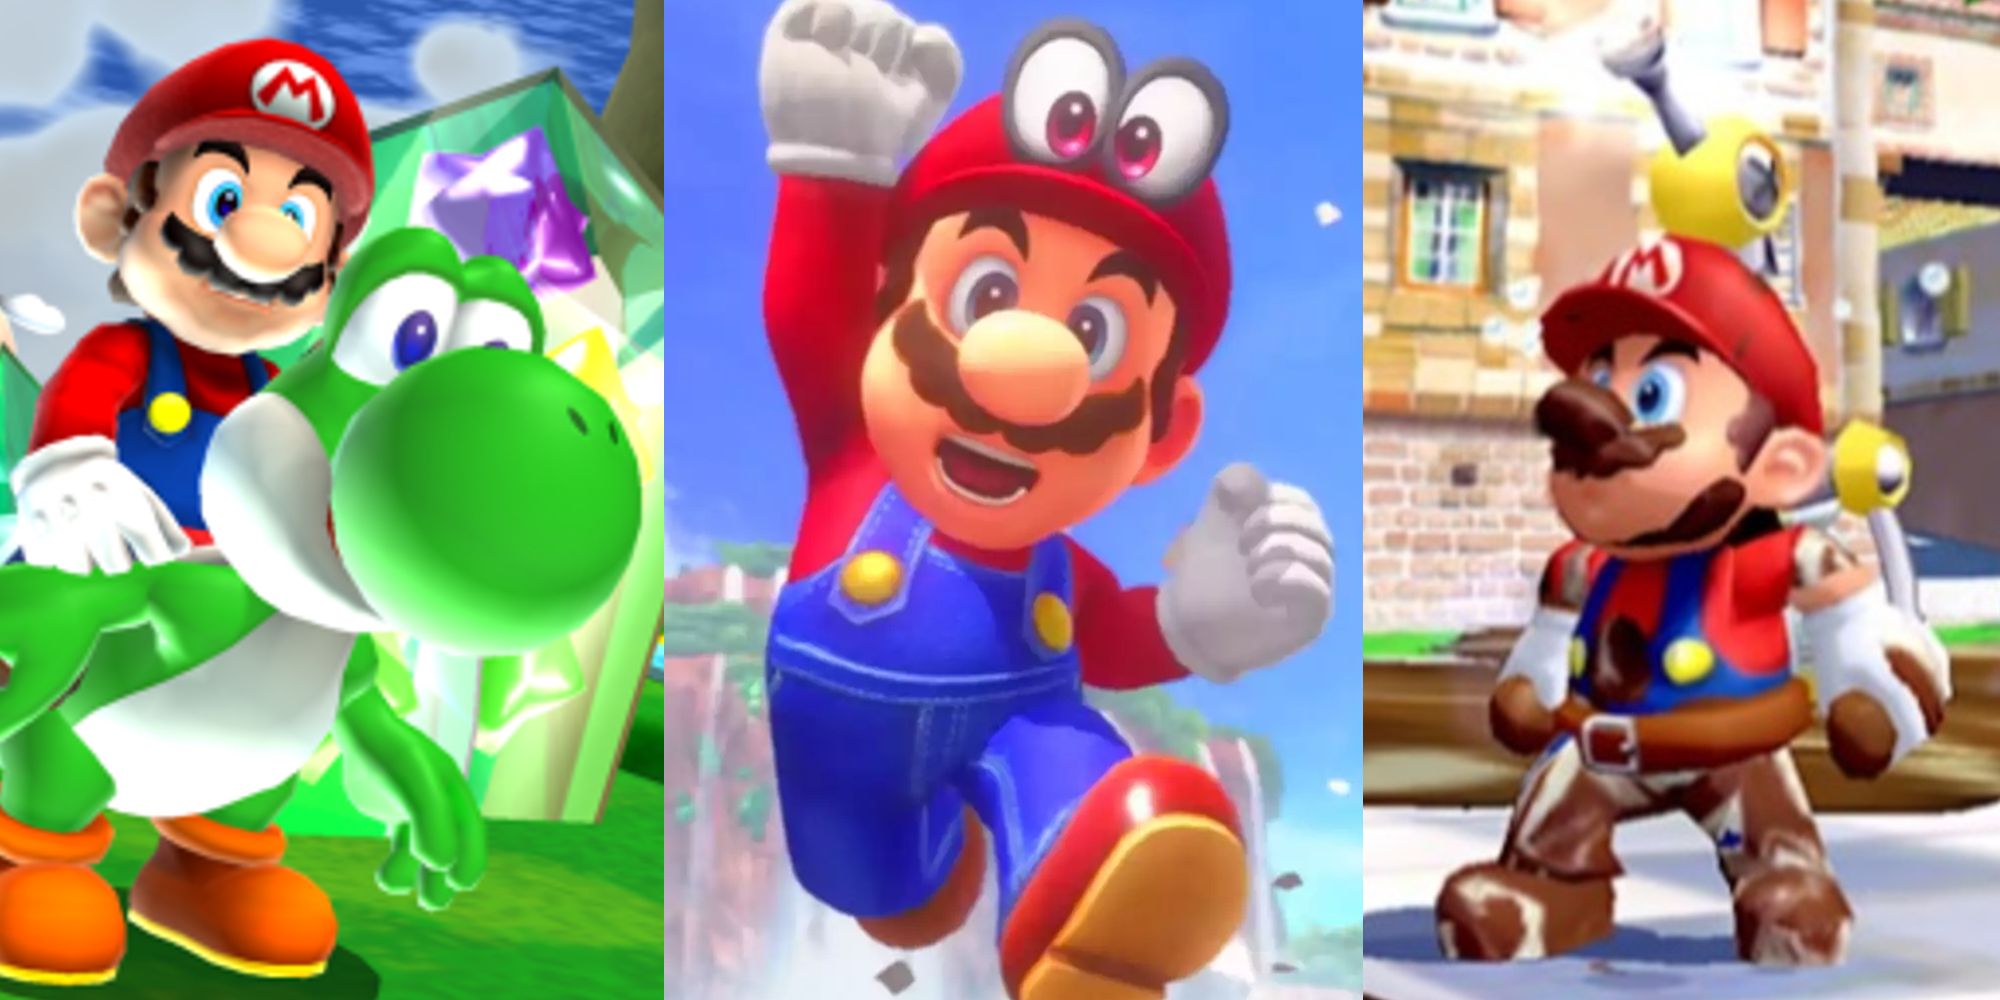 Mario riding Yoshi; Mario jumping with Cappy; a dirty Mario sprays F.L.U.D.D.